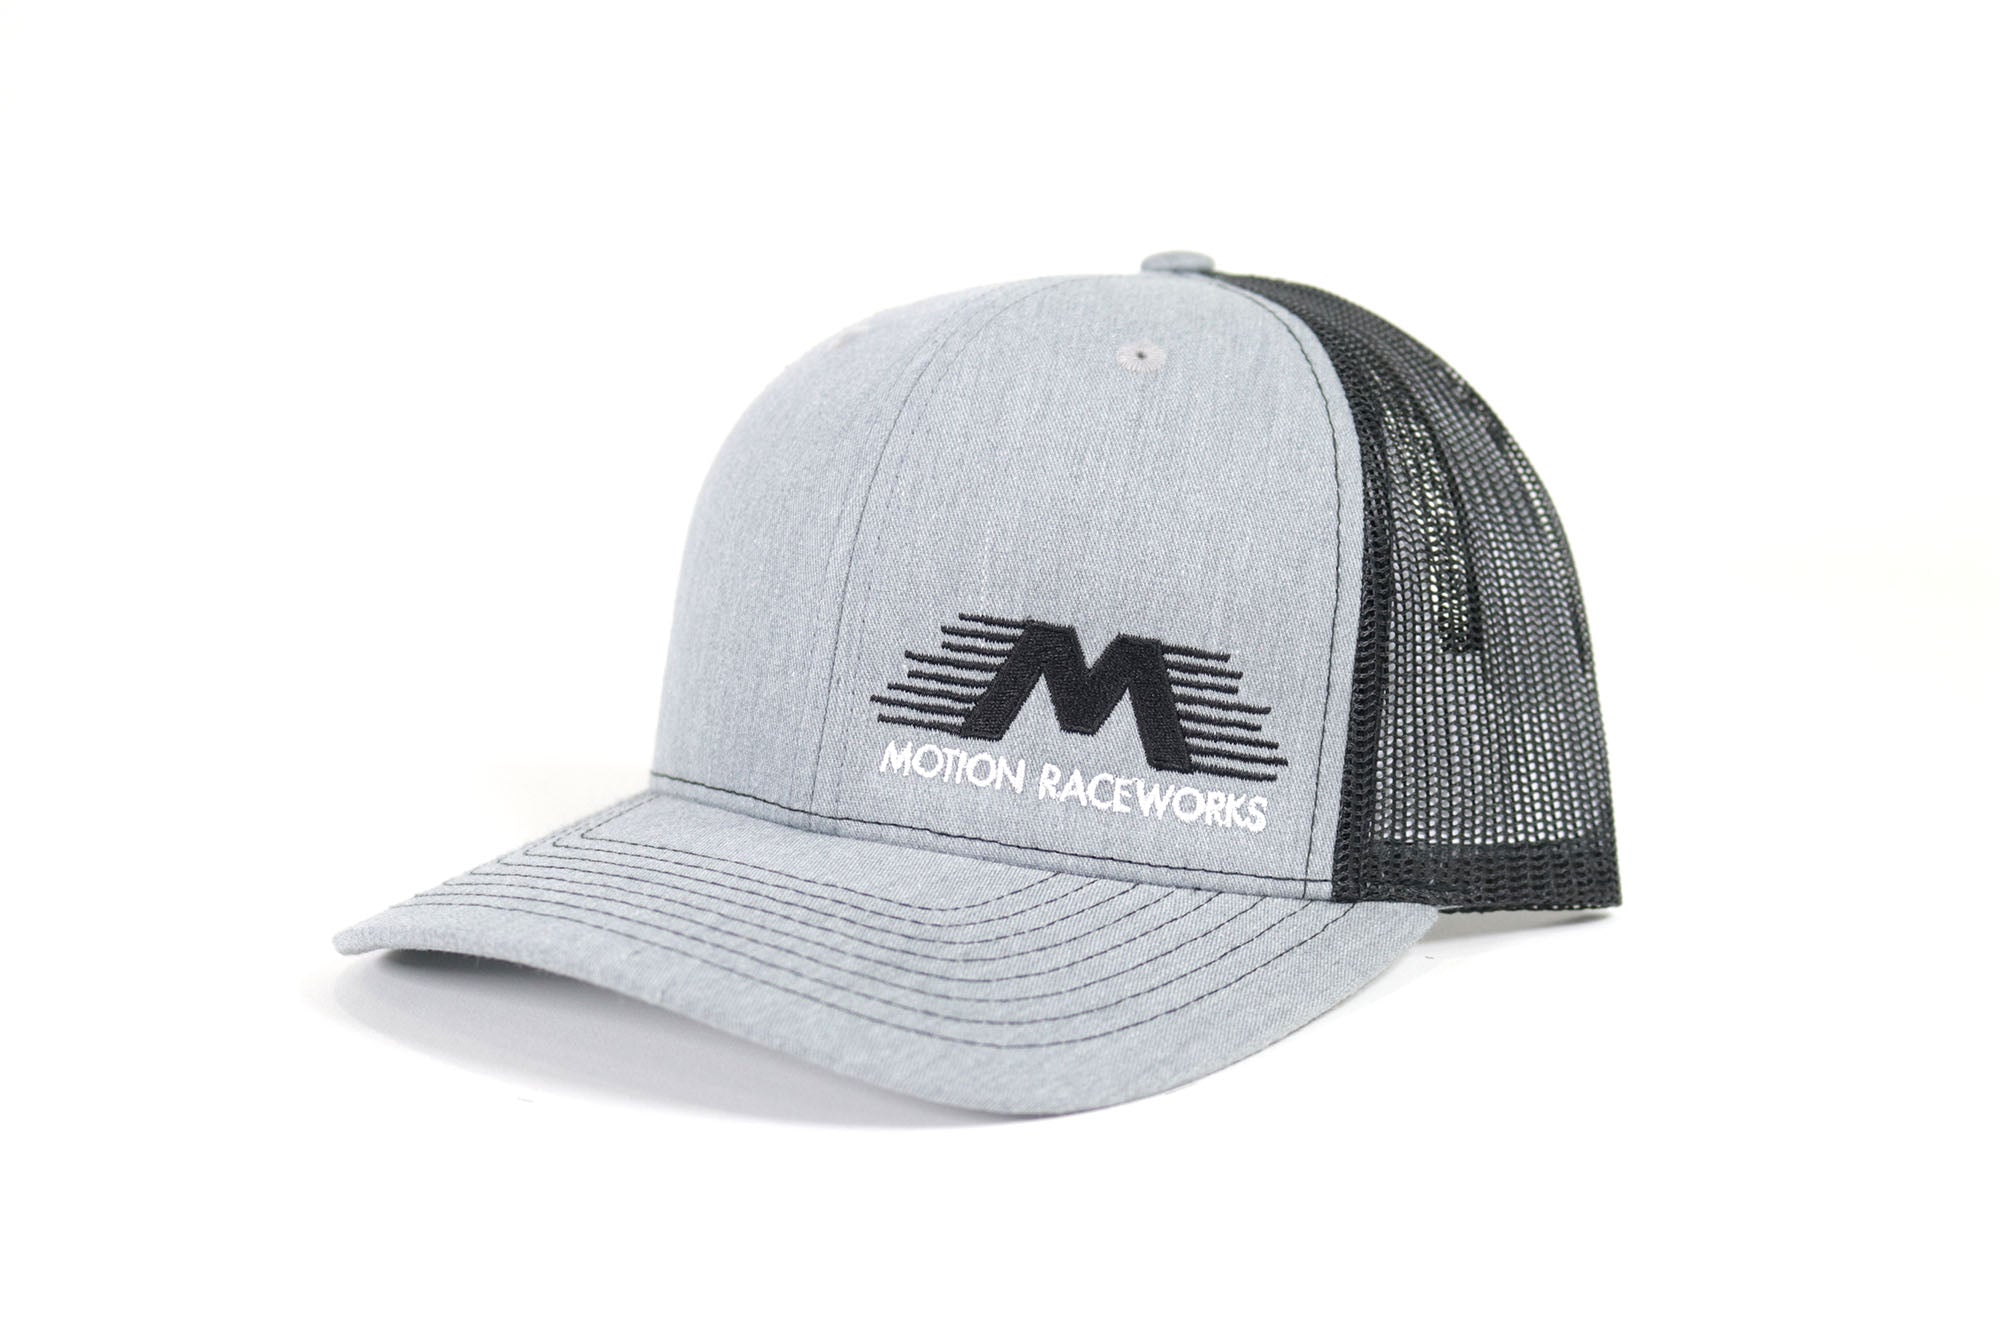 Black/Heather Gray Motion Raceworks Snapback Hat w/ Mesh Back 95-111 | Trucker Caps